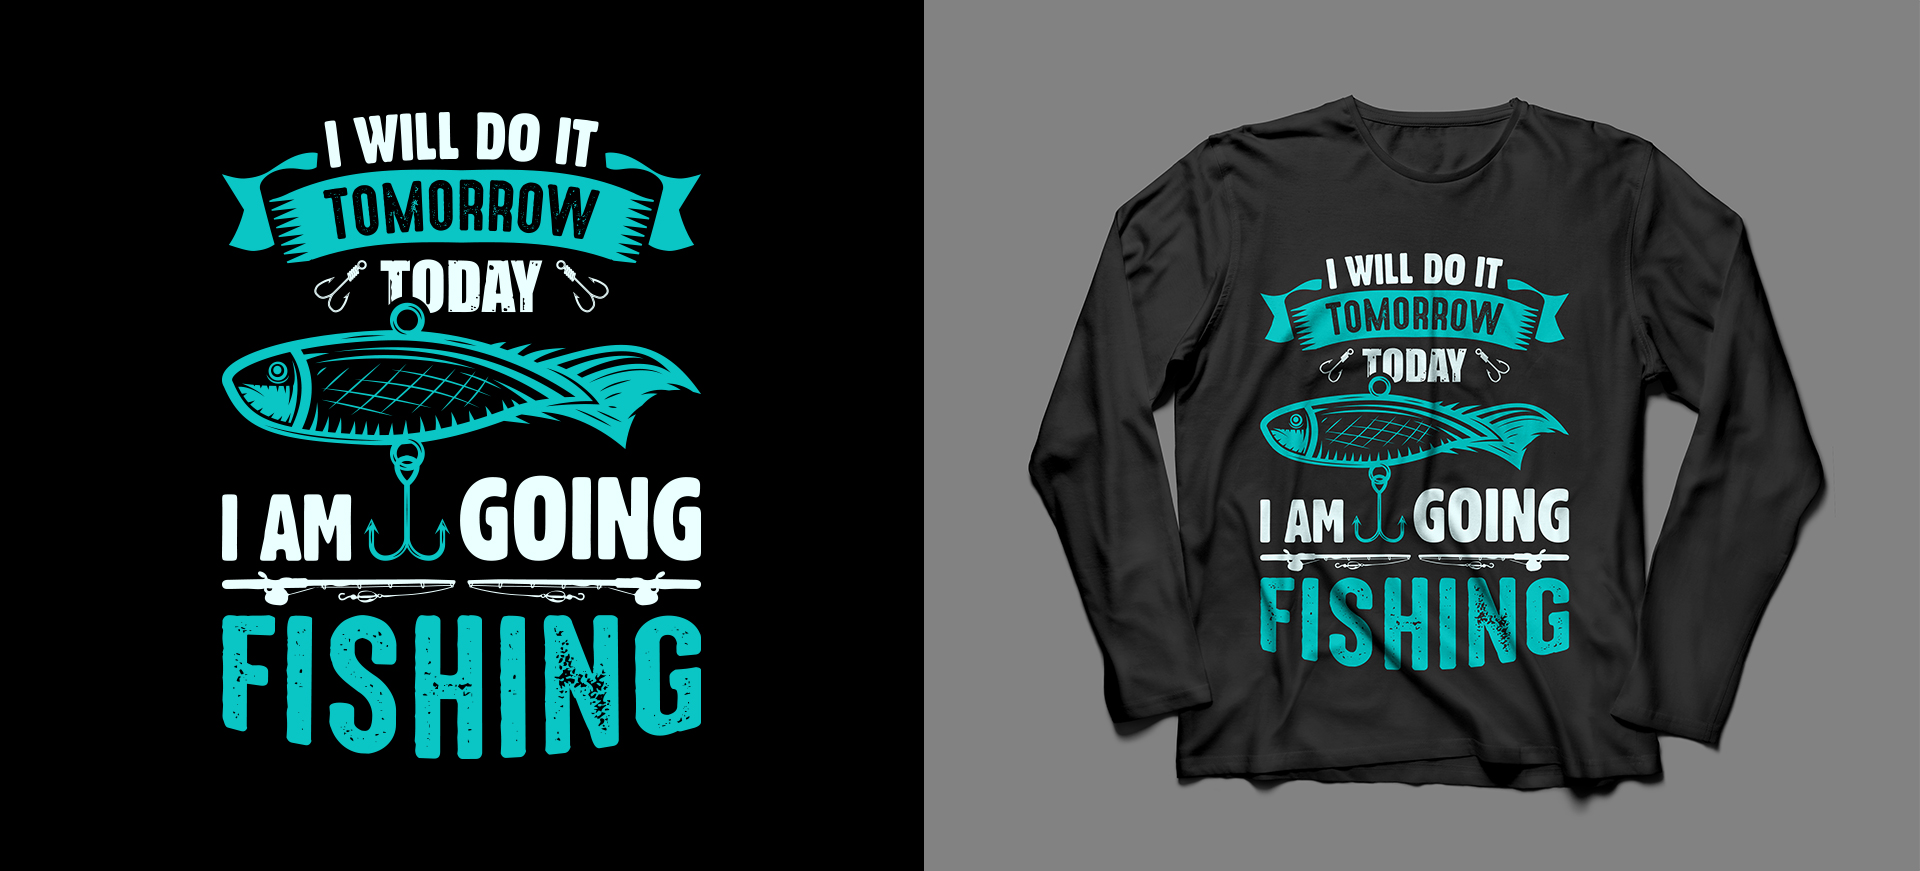 fishing t shirt design bundle - Fishing t shirt designs